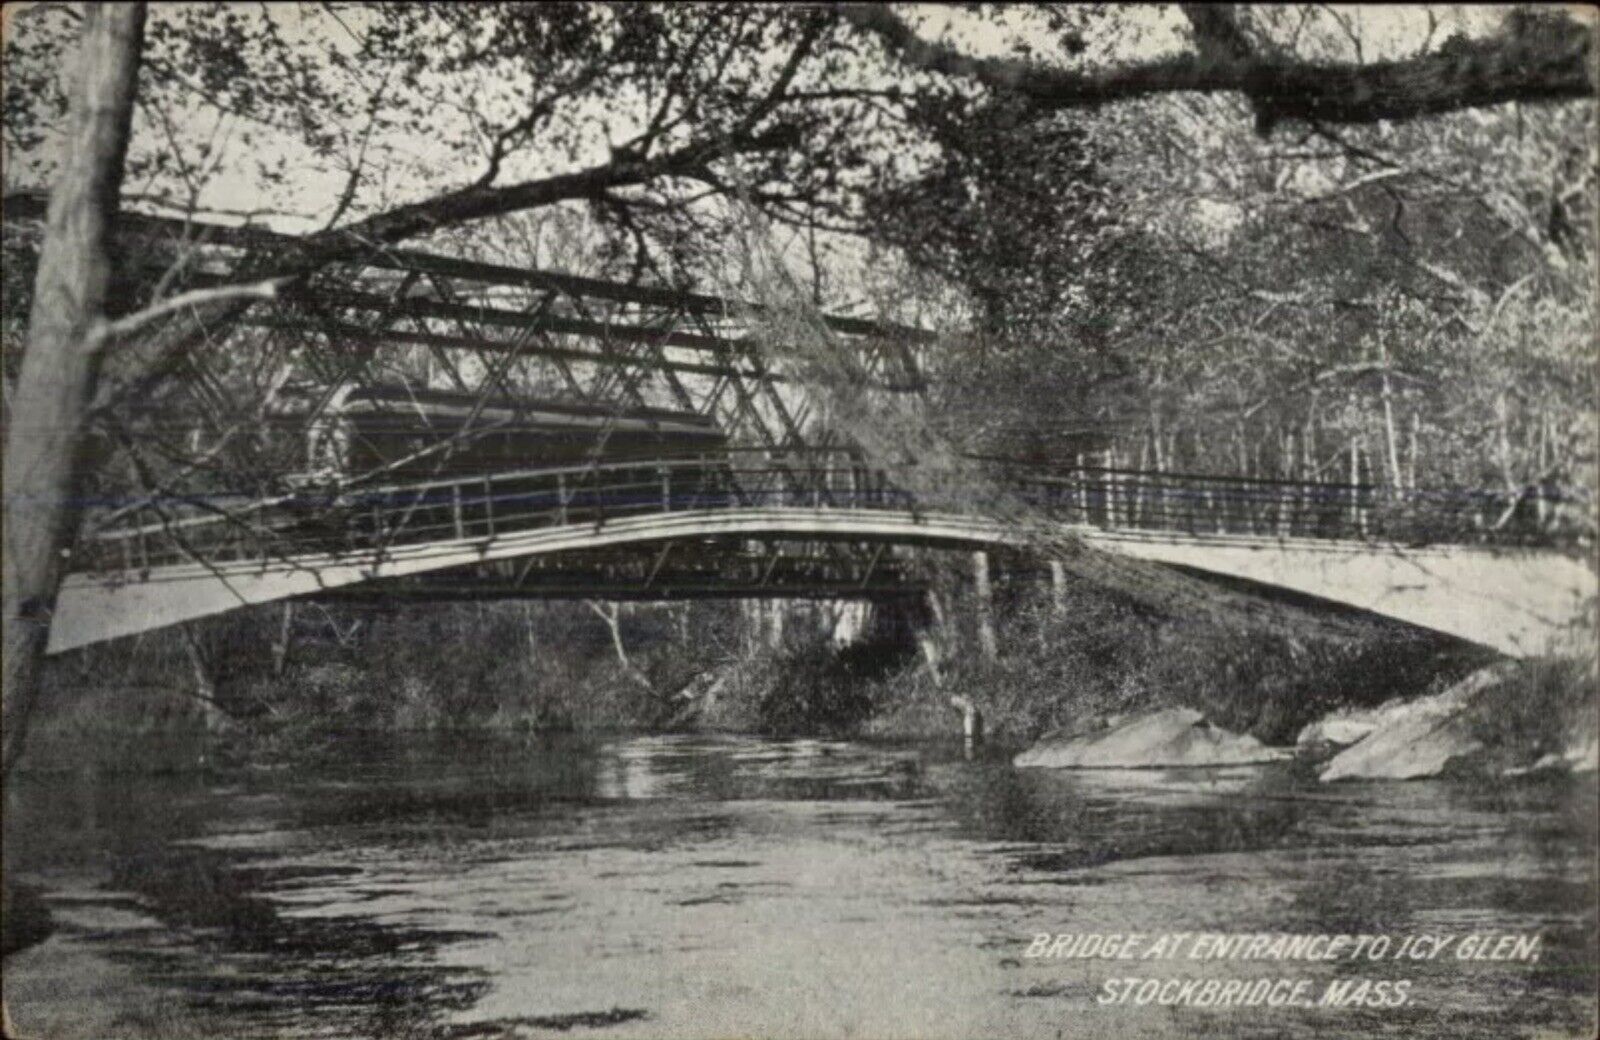 Stockbridge MA Bridge Entrance to Icy Glen c1910 Postcard